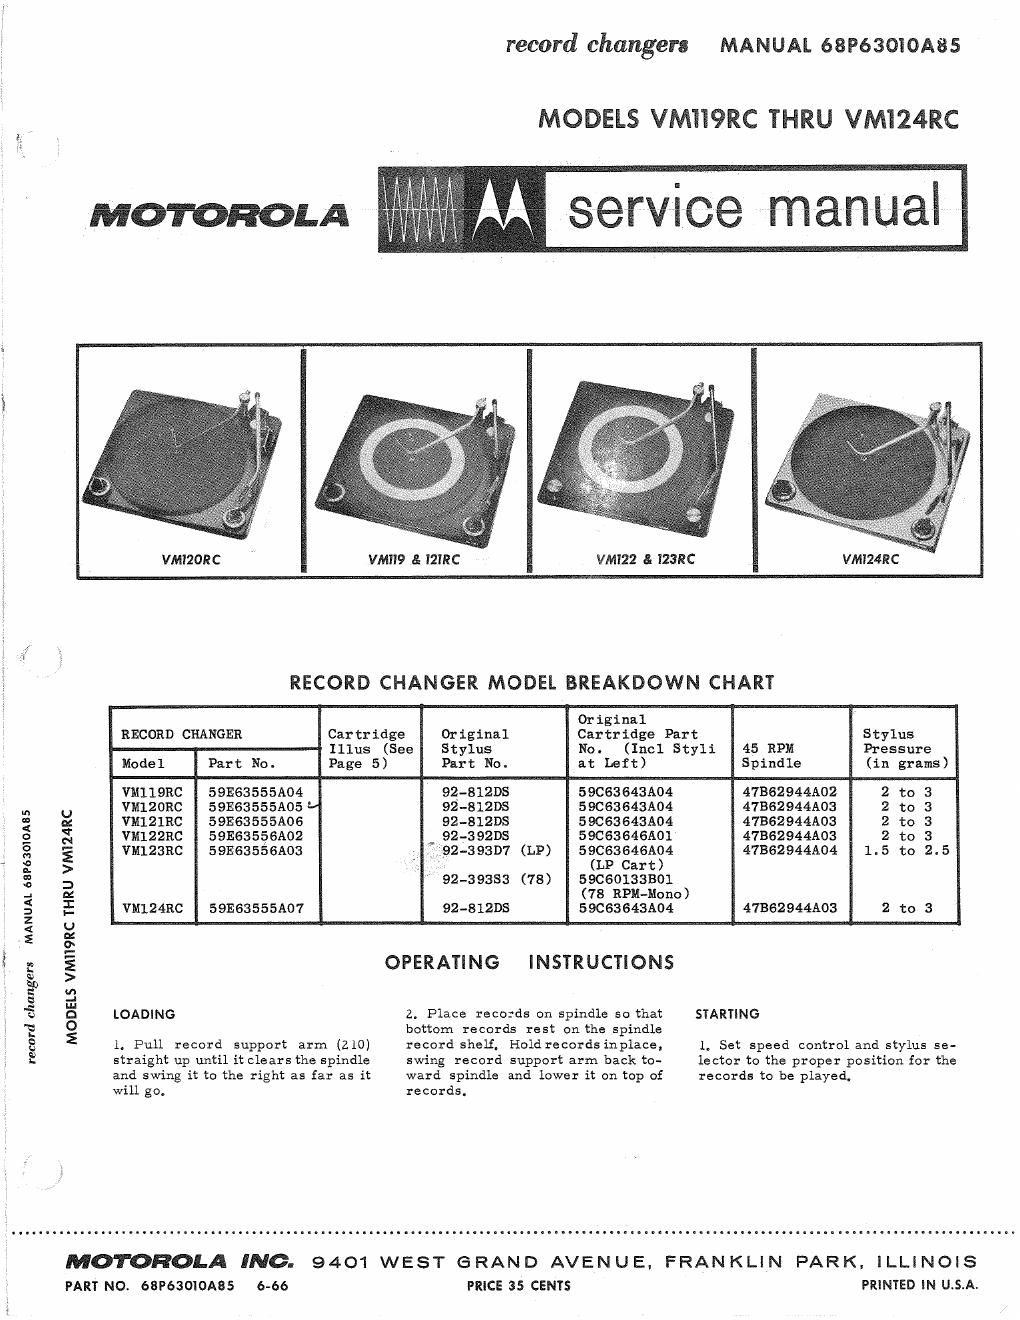 motorola vm 123 rc service manual